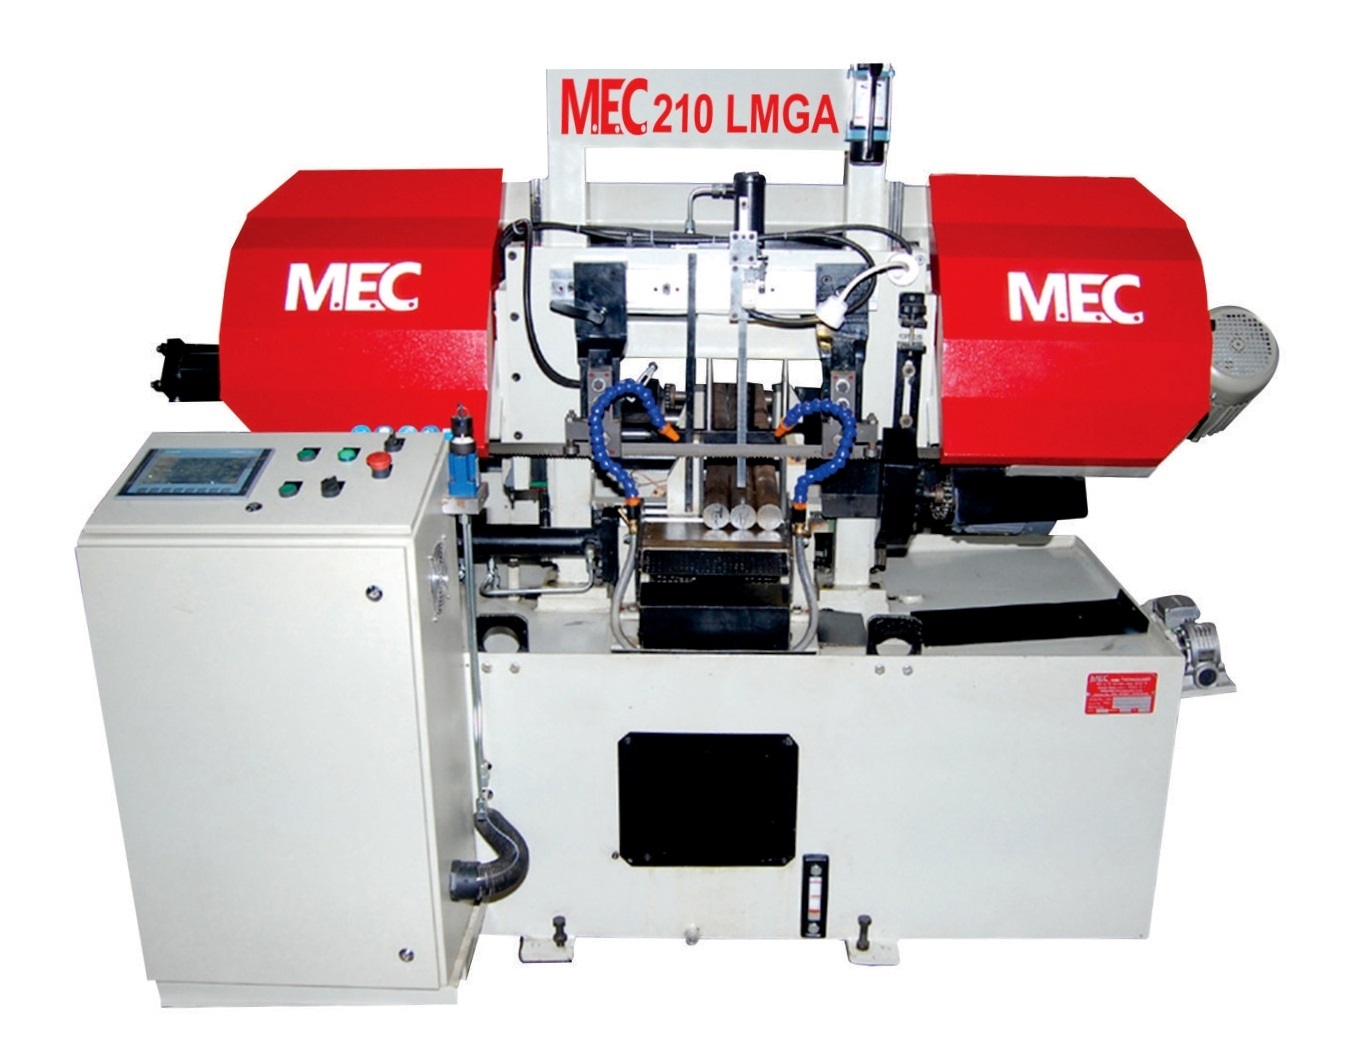 Automatic Metal Cutting Band Saw Machine - 210 LMGA